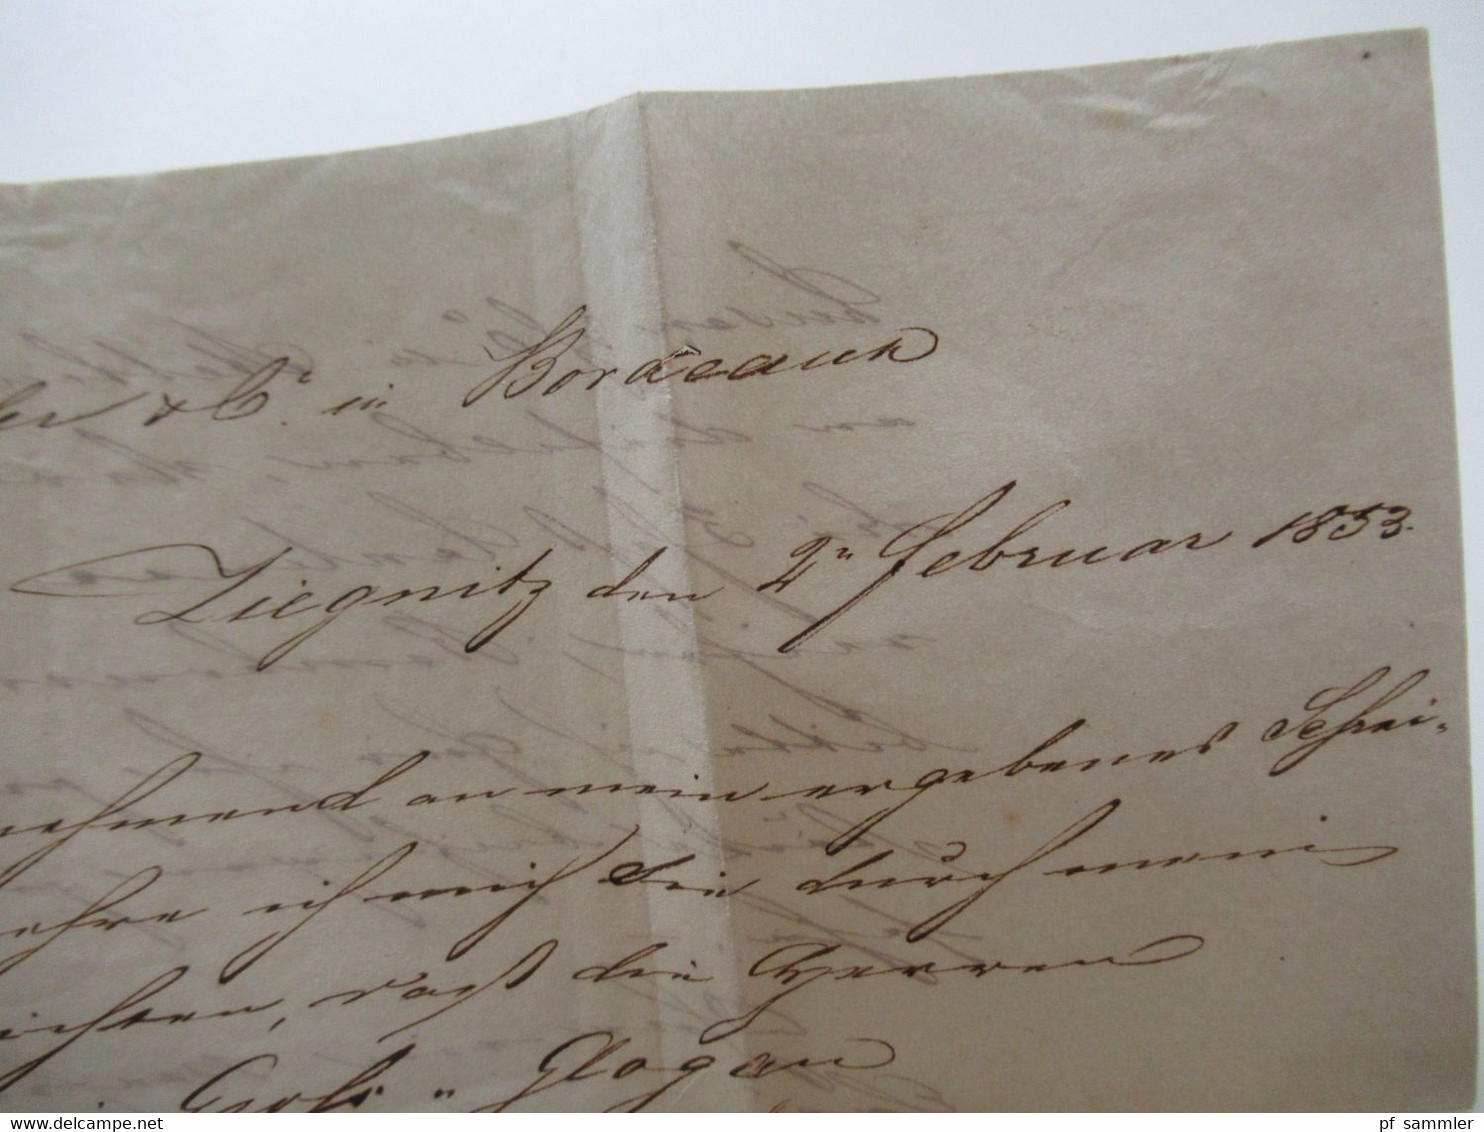 AD2.2.1853 Preussen Niederschlesien Ra2 Liegnitz Auslandsbrief nach Bordeaux rücks. 5 Stempel davon 3x Bahnpost Stp.